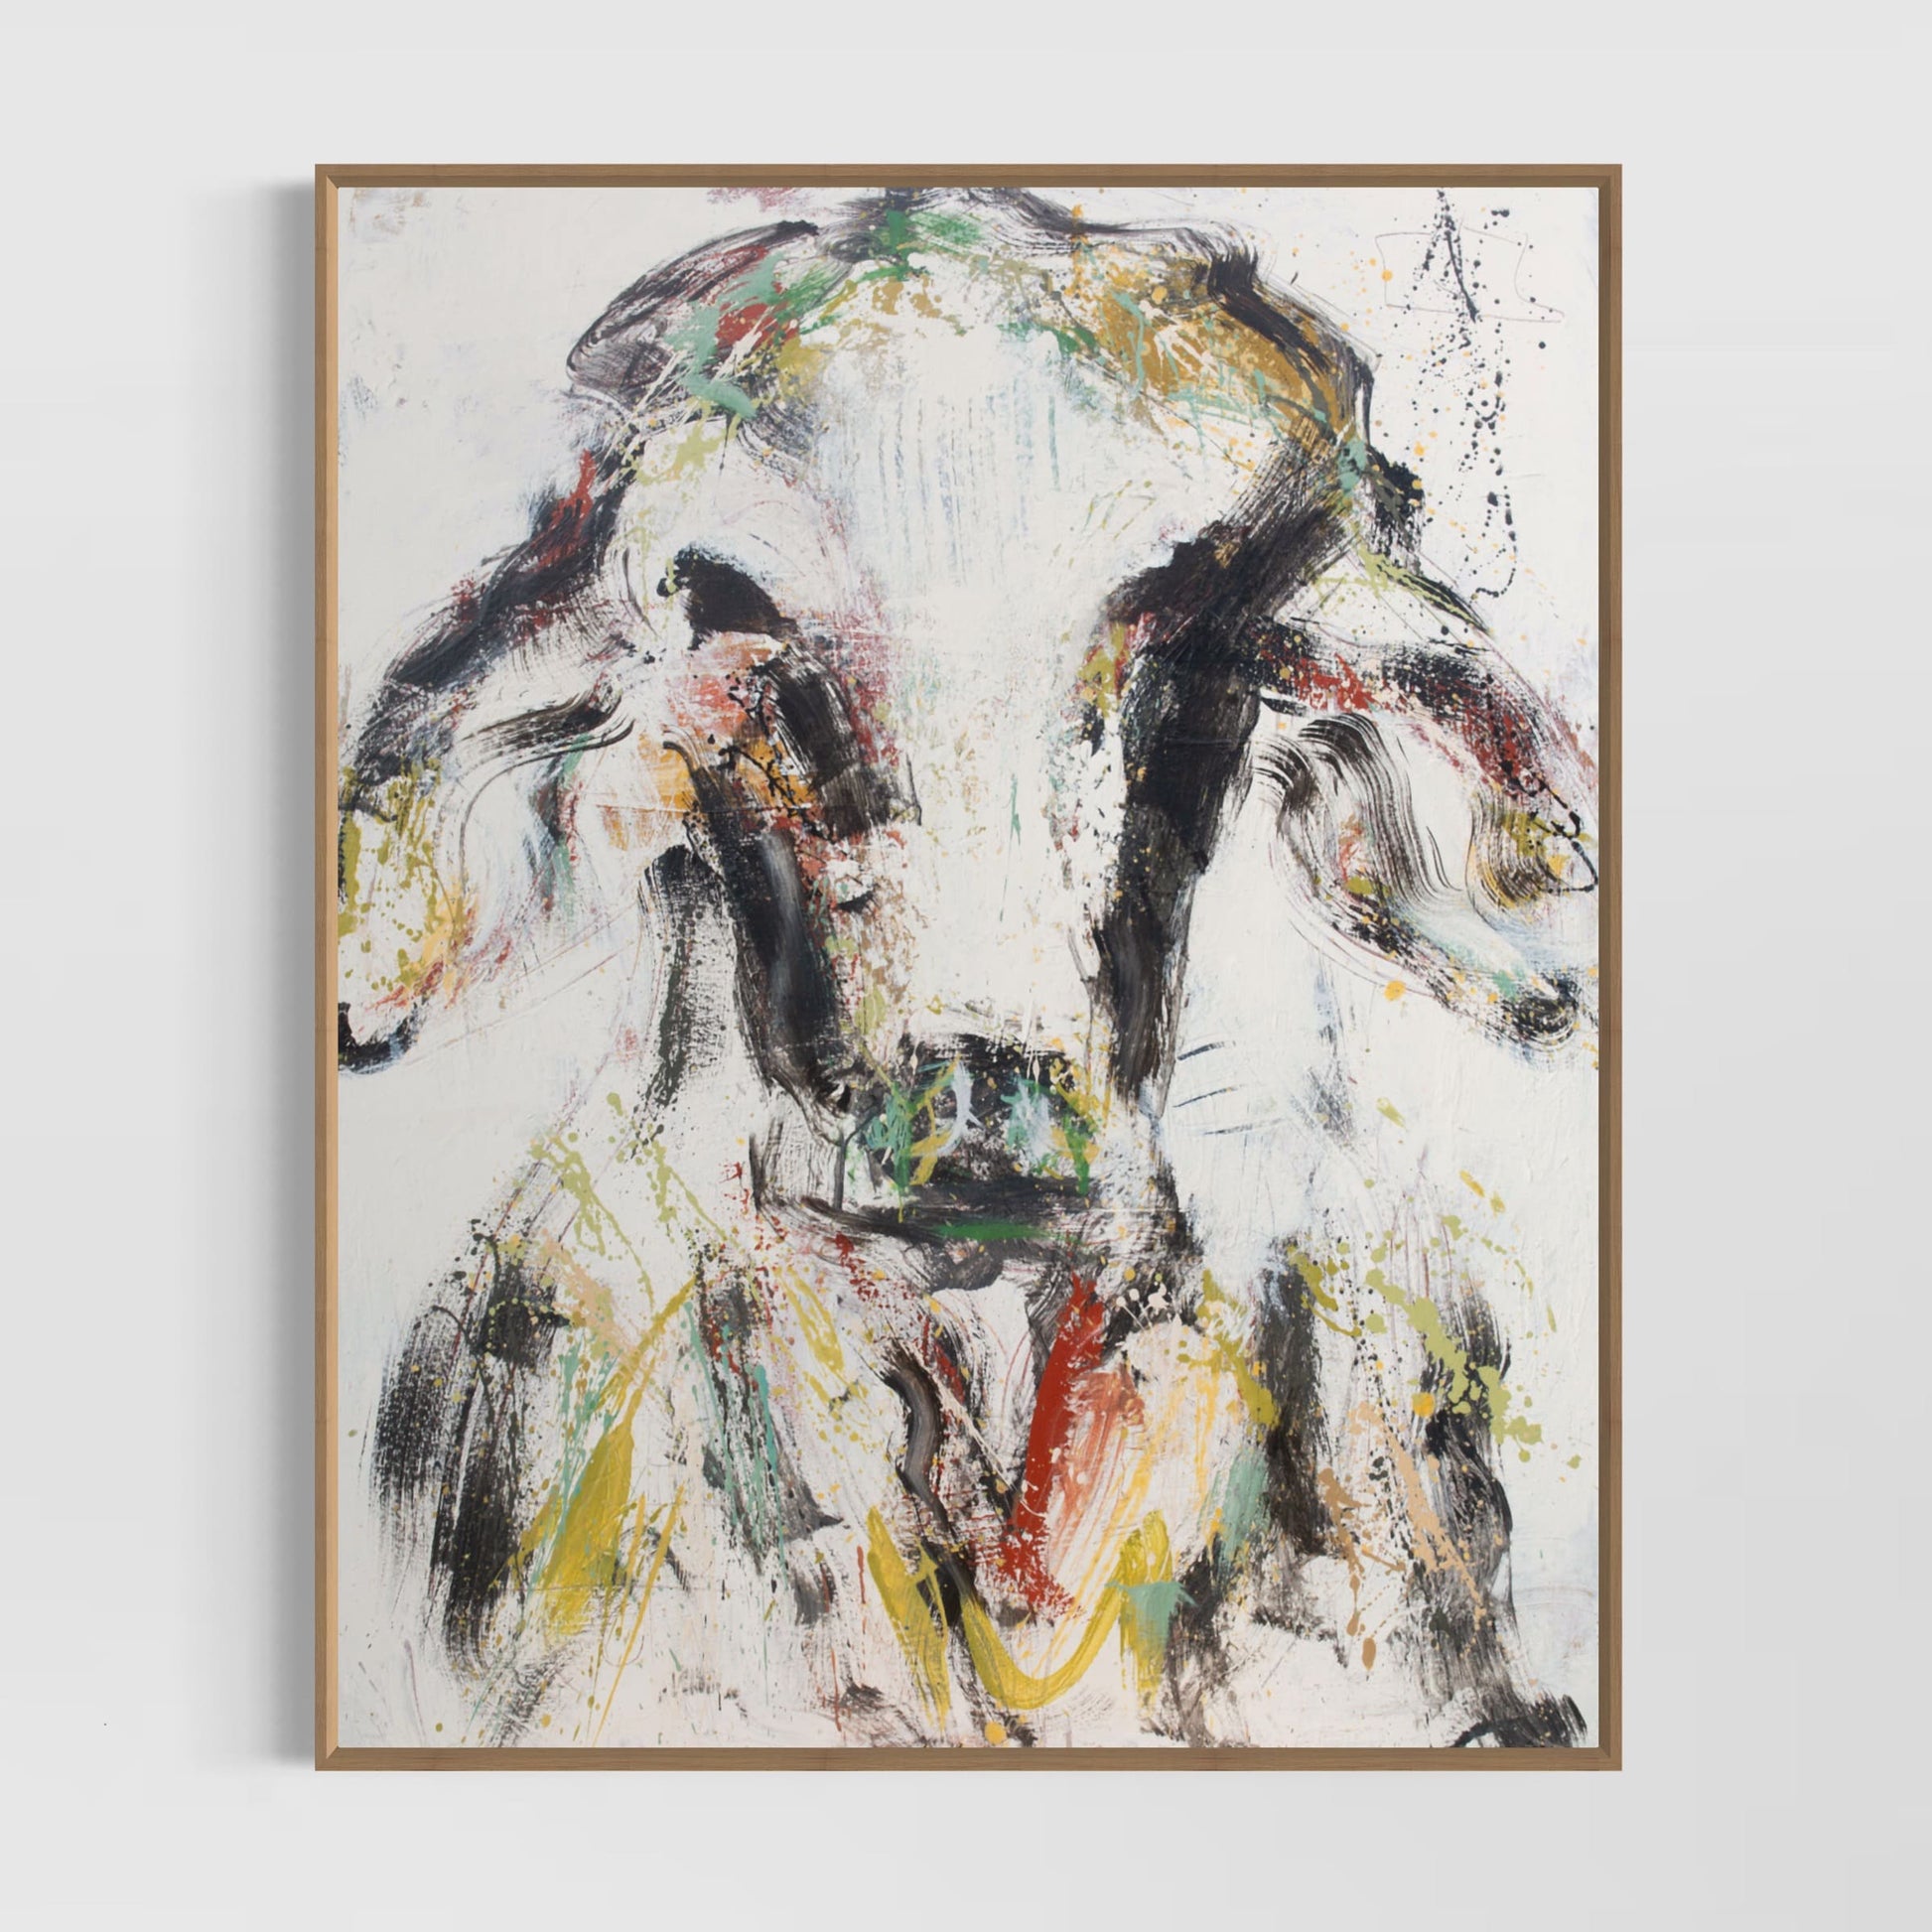 Clover - Canvas Framed 96x123 cm Abstract Cow Statement Piece by Australian Artist Rose Hewartson